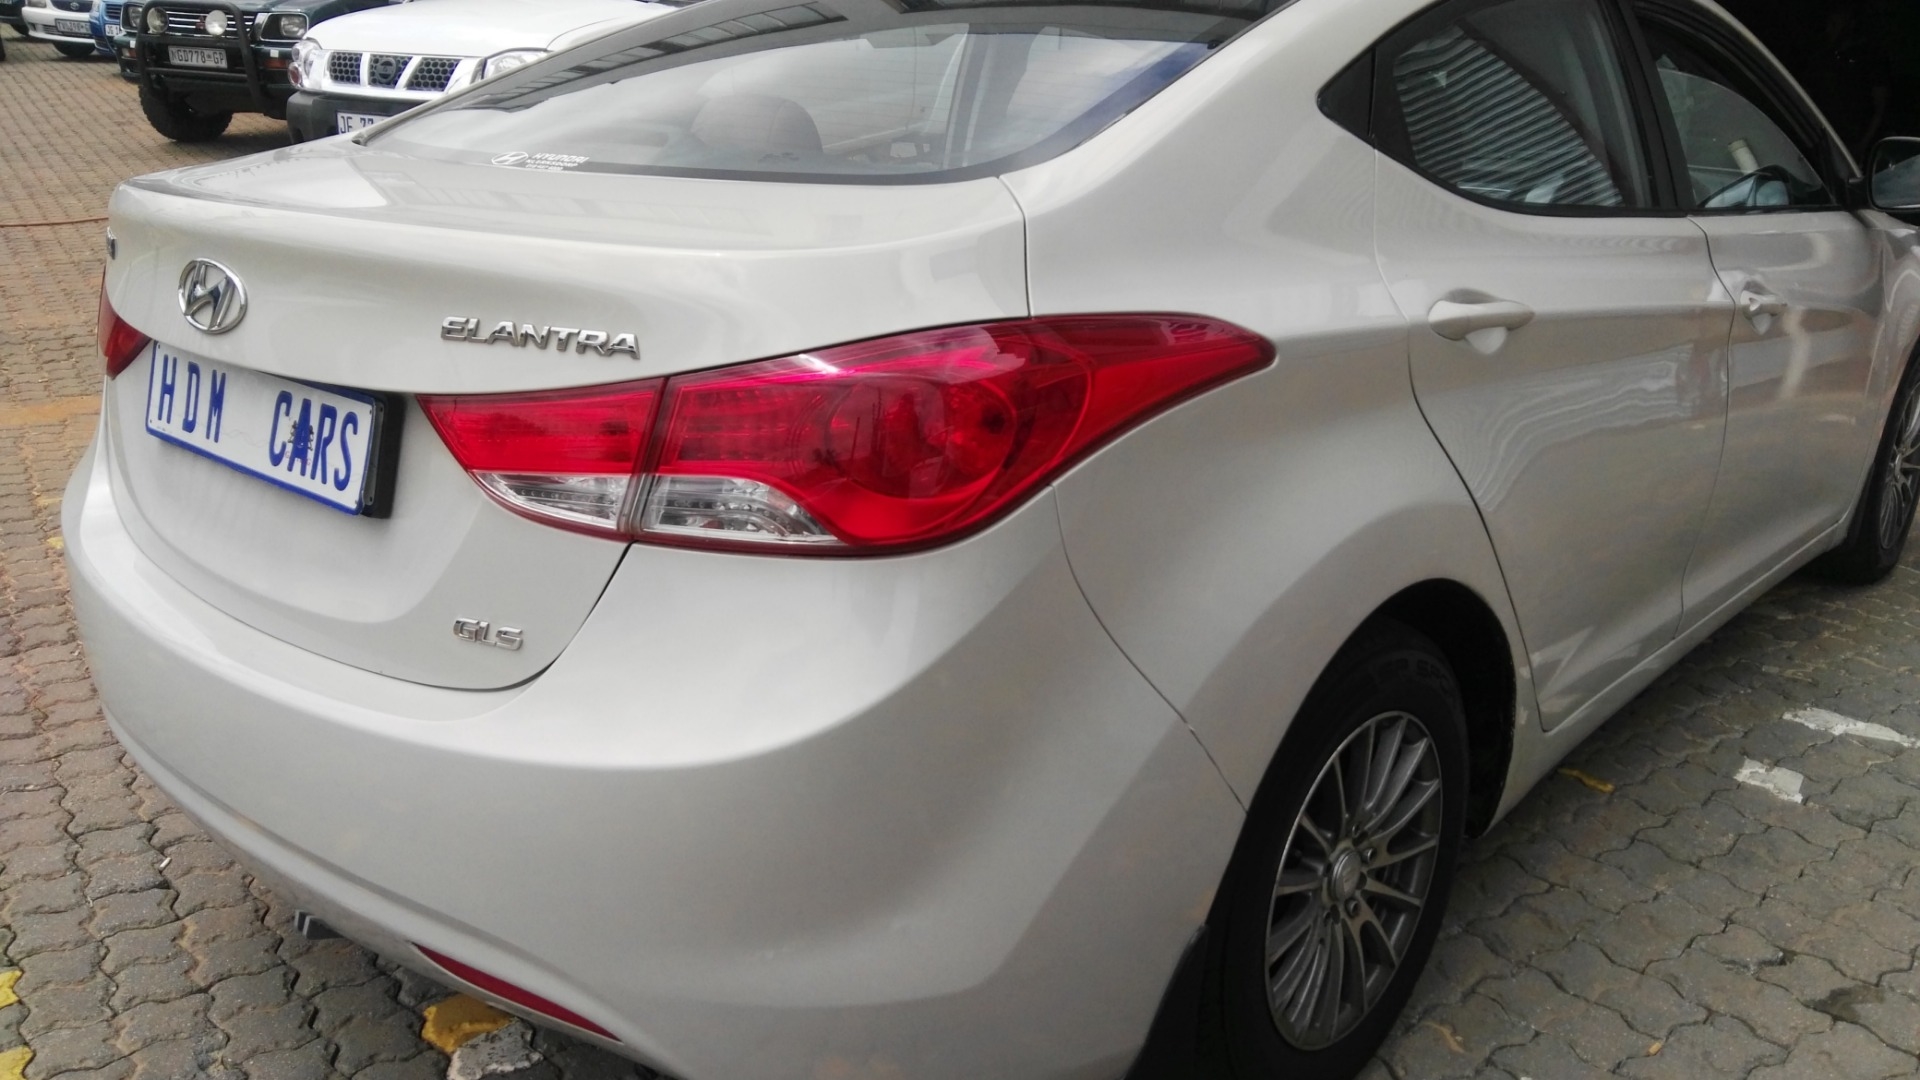 Hyundai Elantra 1.6 GLS for sale in Gauteng Auto Mart